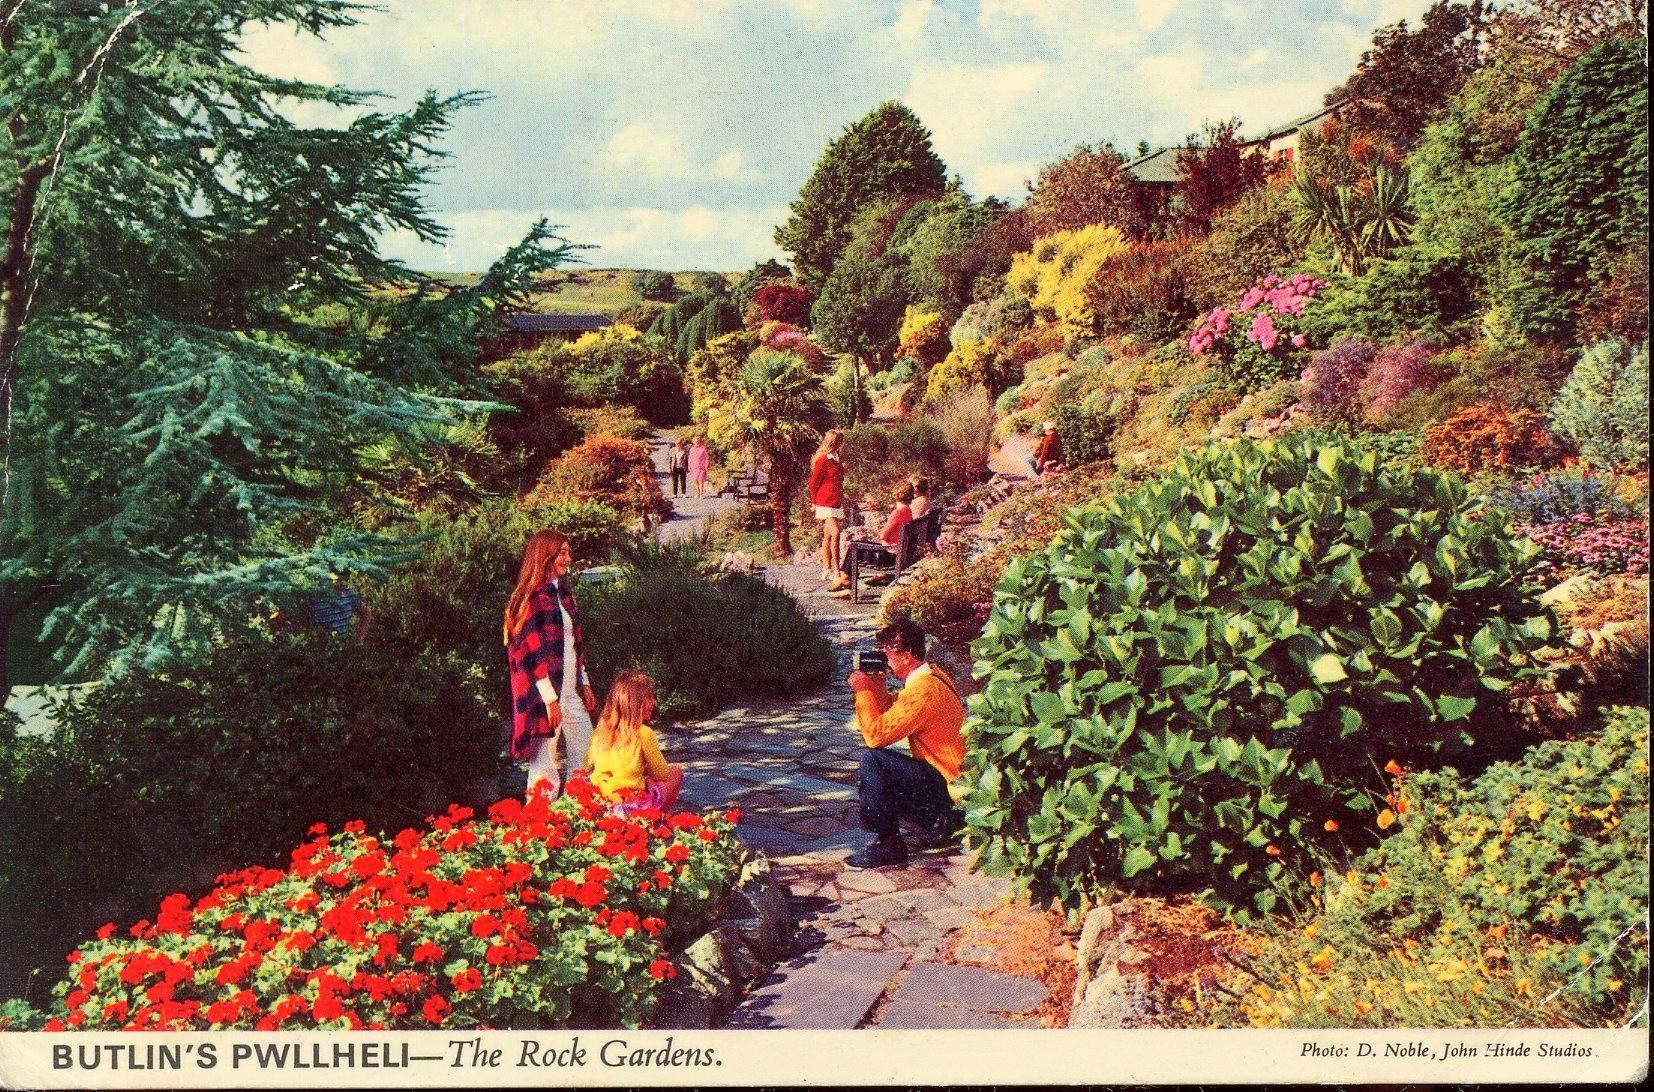 Butlins Pwllheli - Rock Gardens (postcard, early 1970s)